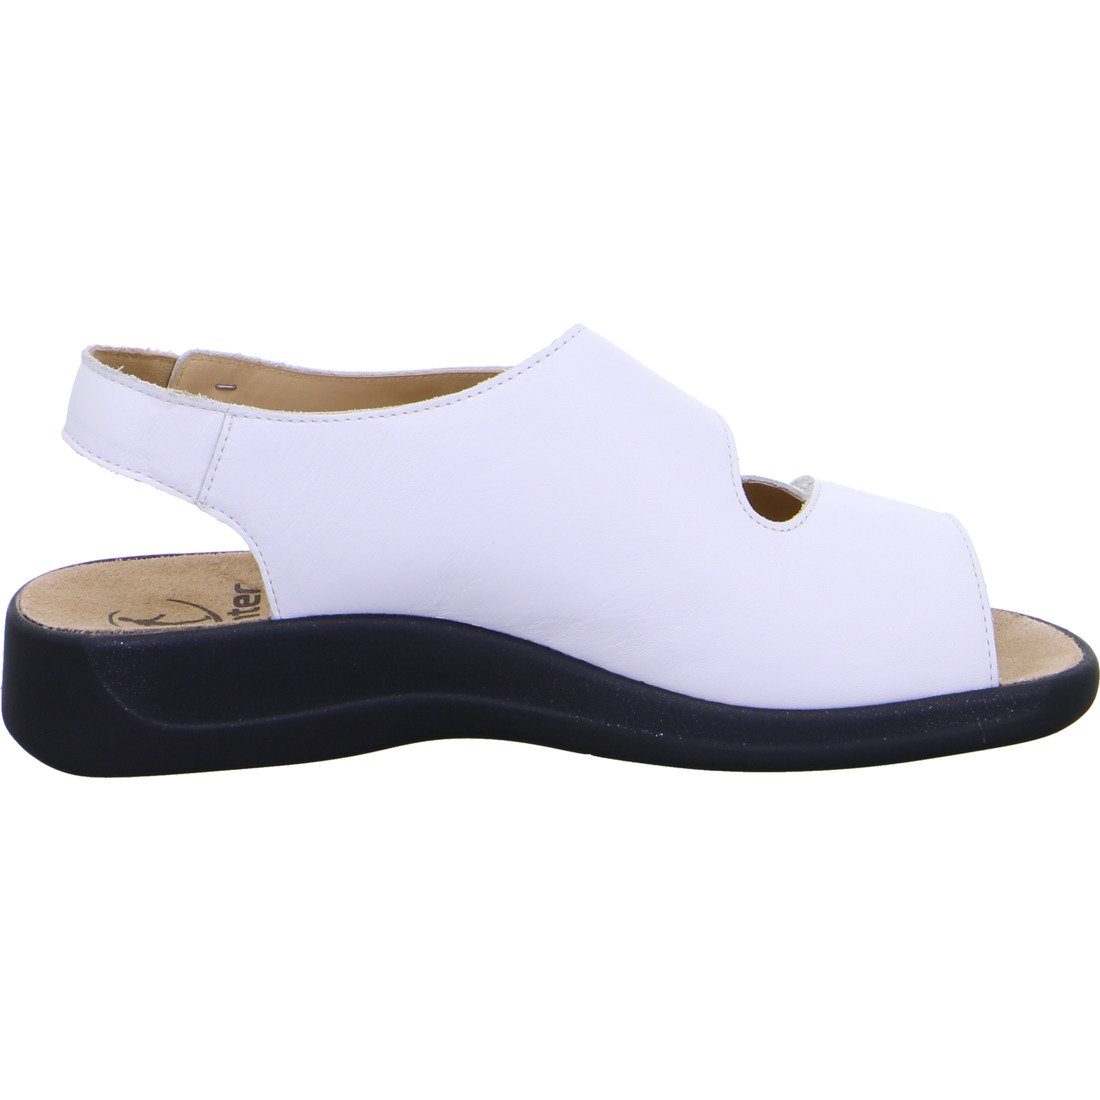 Ganter Ganter Schuhe, Monica Sandalette 045896 Materialmix weiß Sandalette 